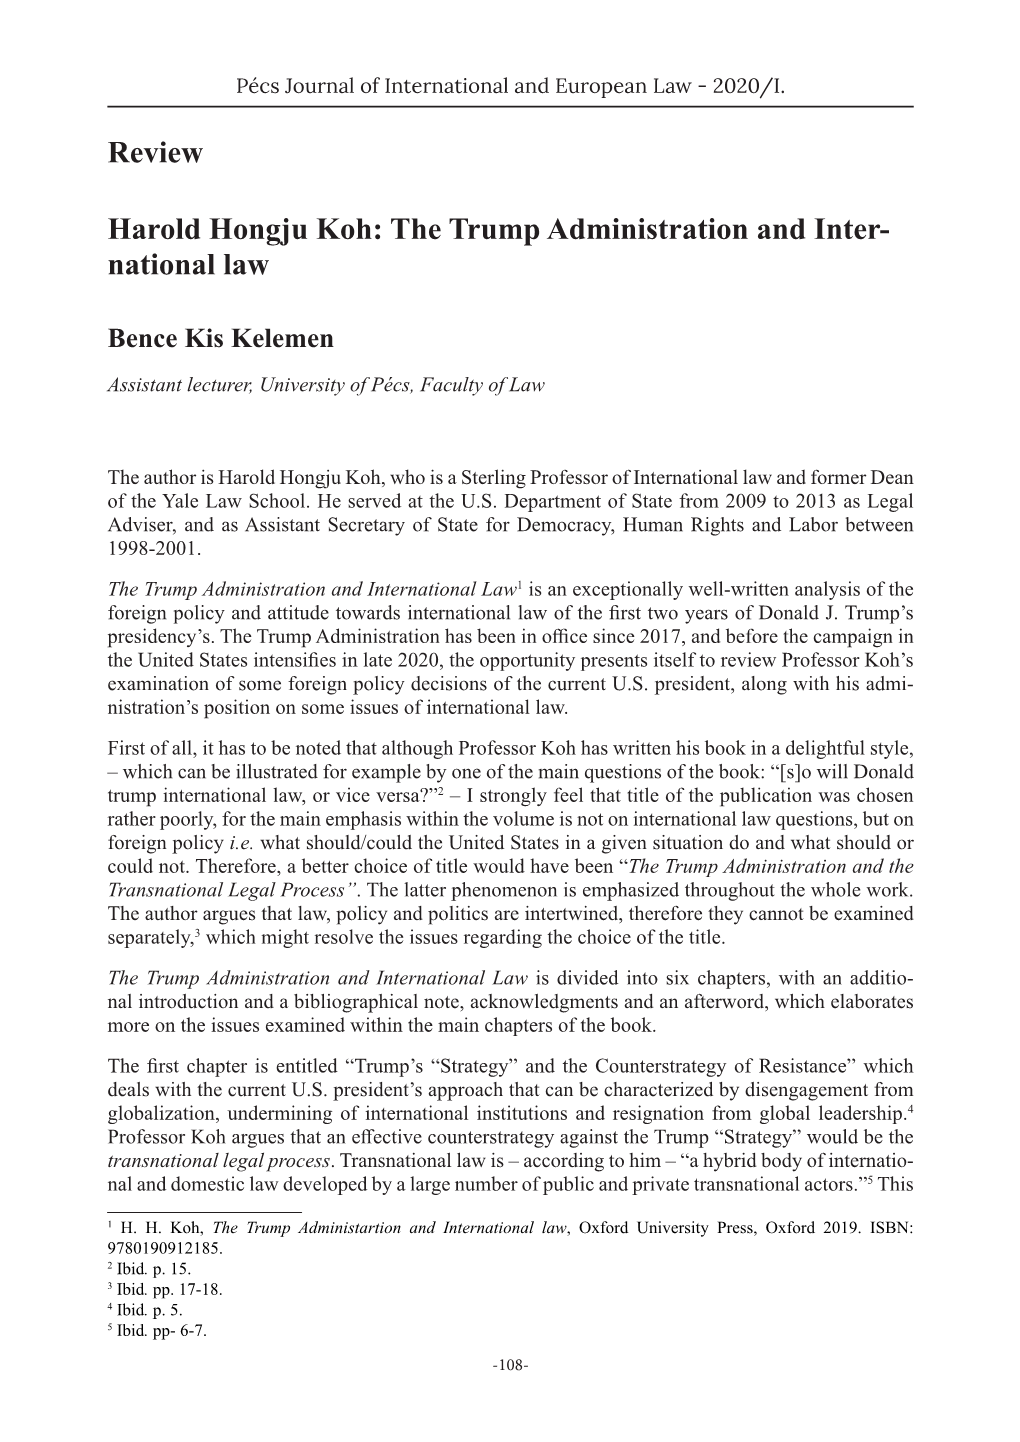 Review Harold Hongju Koh: the Trump Administration and Inter